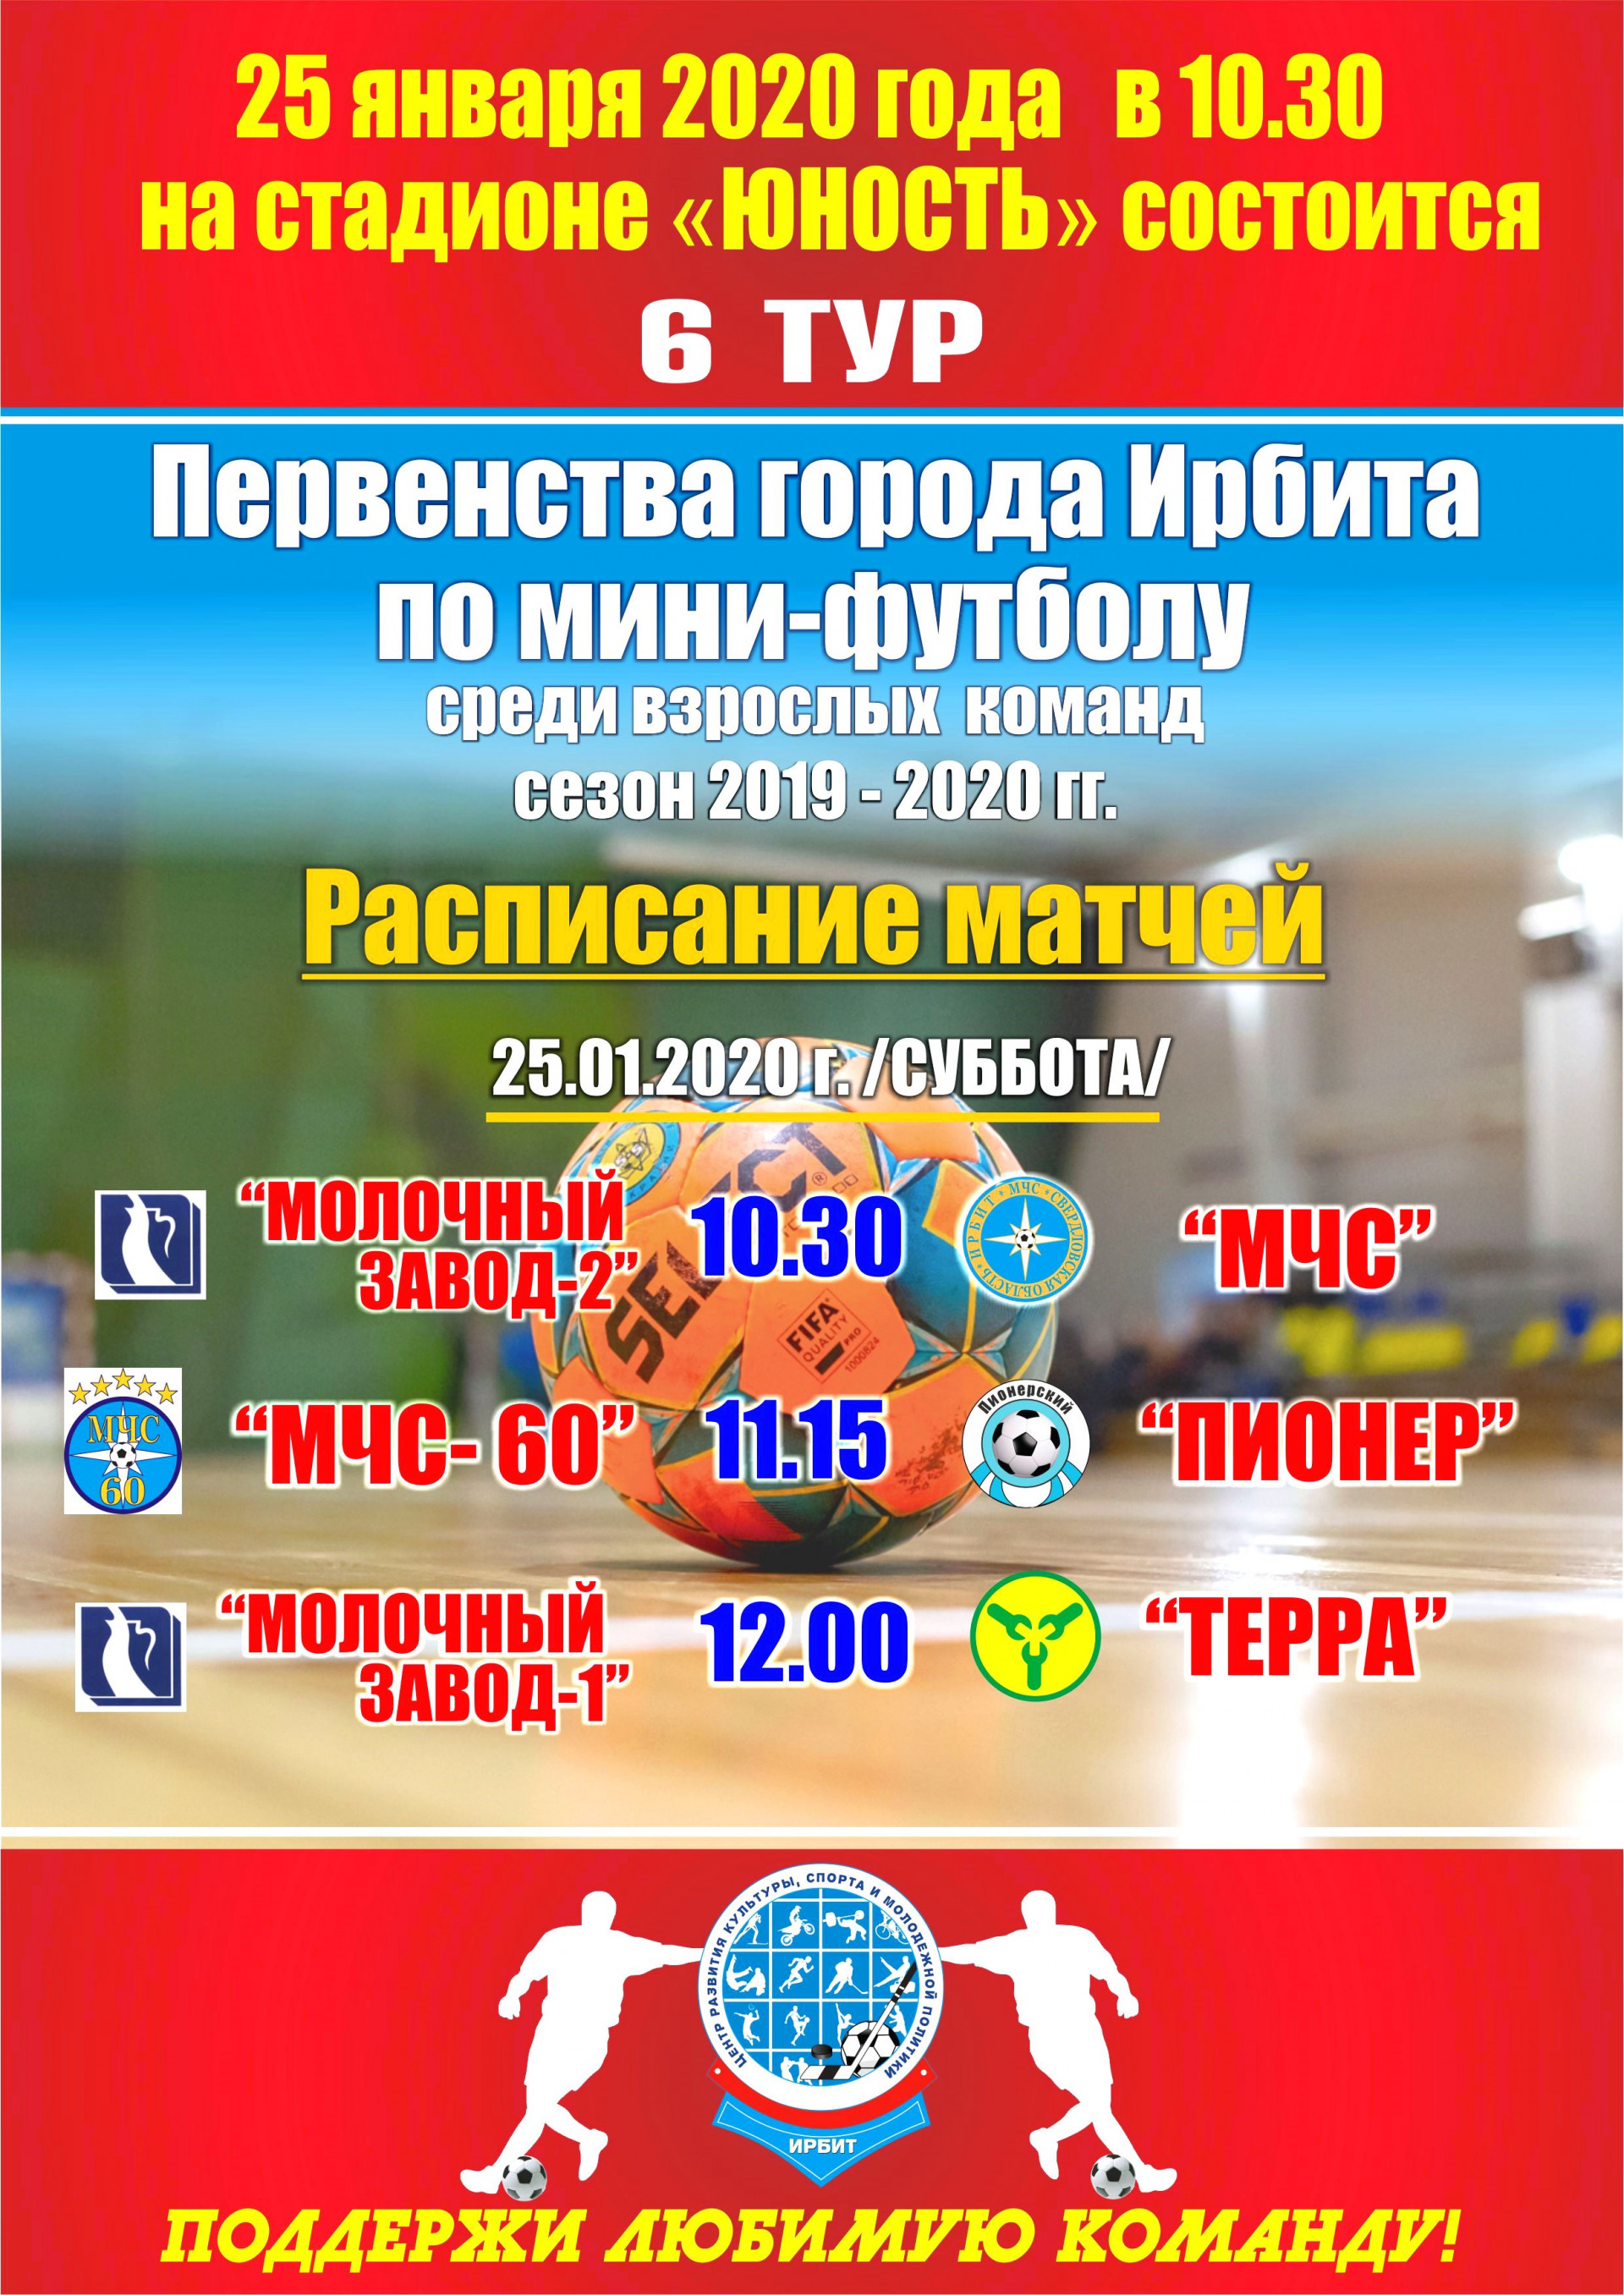 6 тур Первенства города Ирбита по мини-футболу среди взрослых команд сезон 2019-2020 гг.